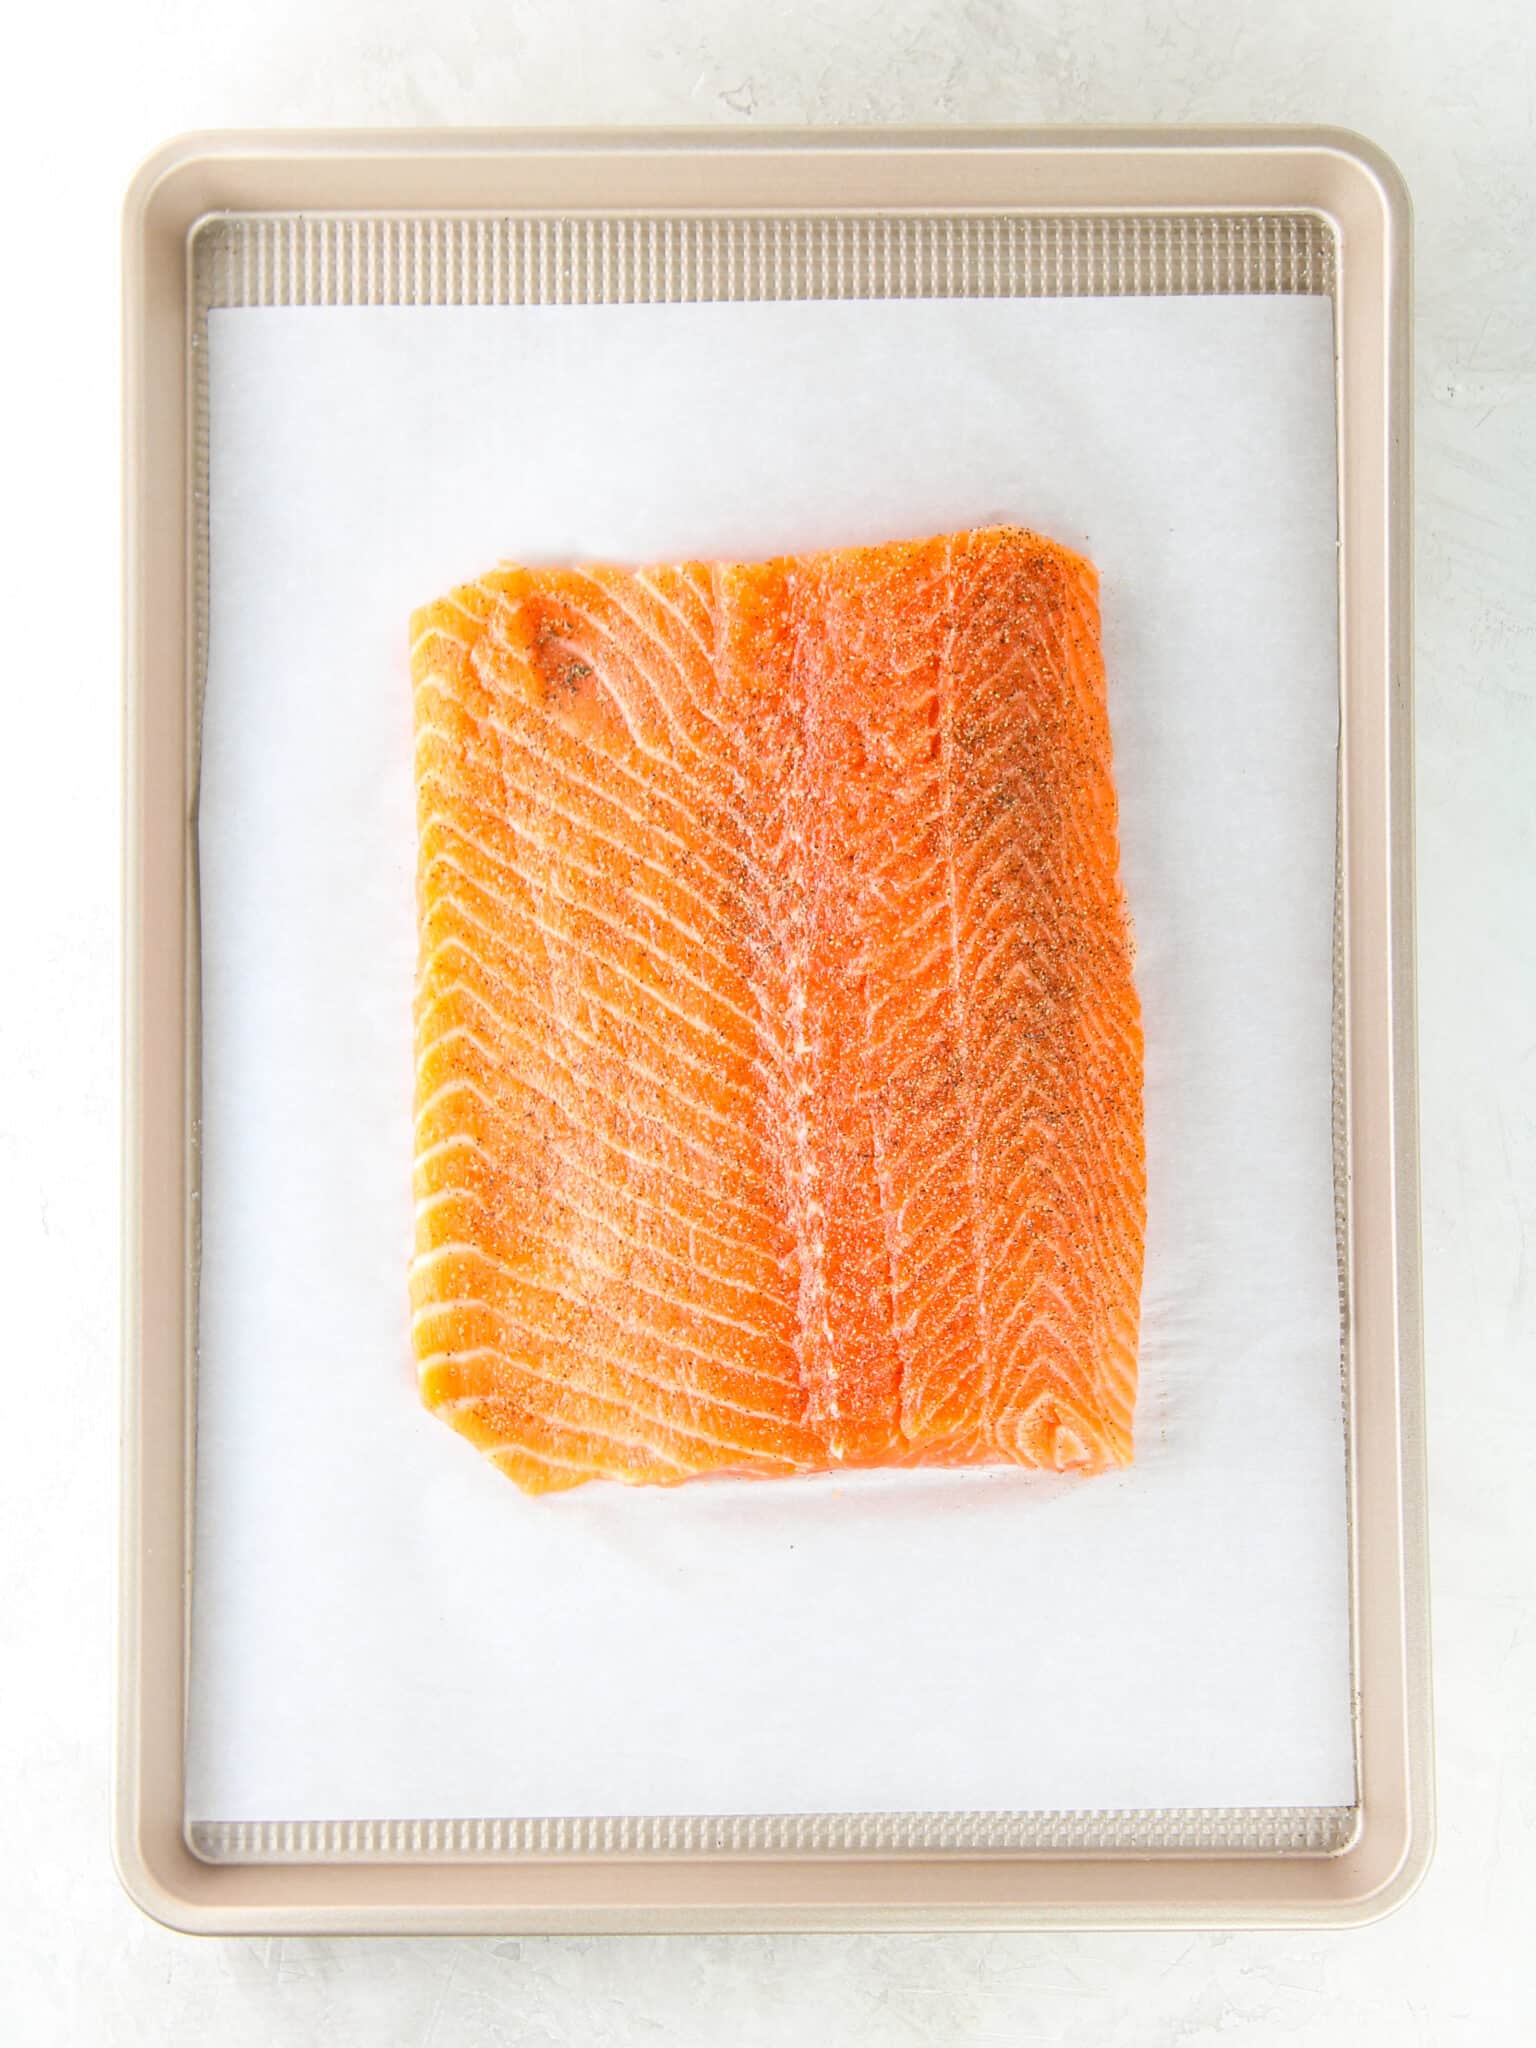 How to bake fresh salmon.